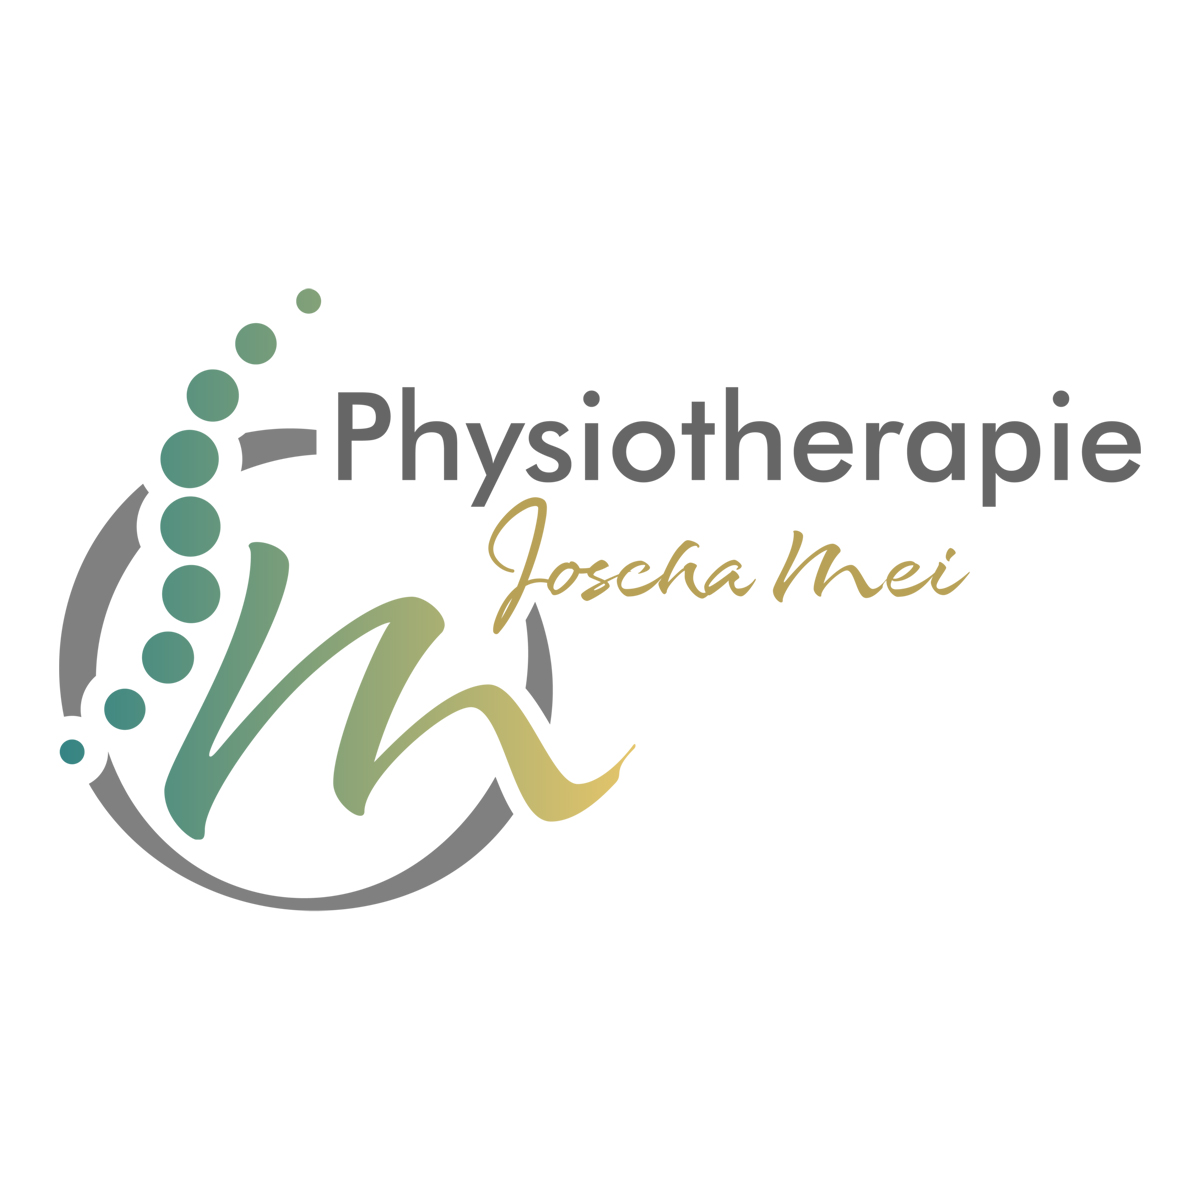 Physiotherapie Joscha Mei Logo